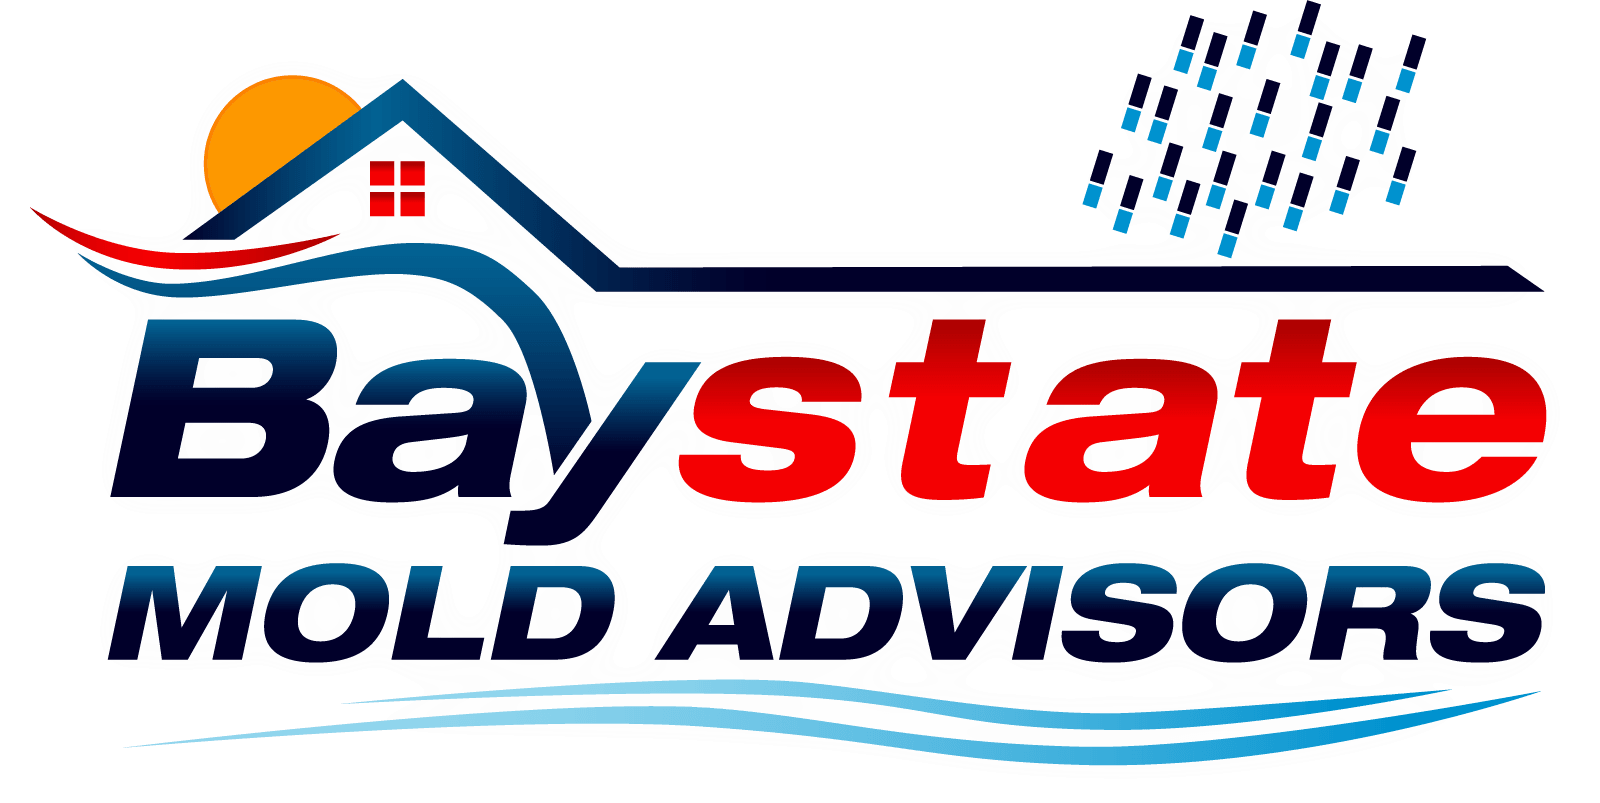 Baystate Mold Advisors LLC Logo